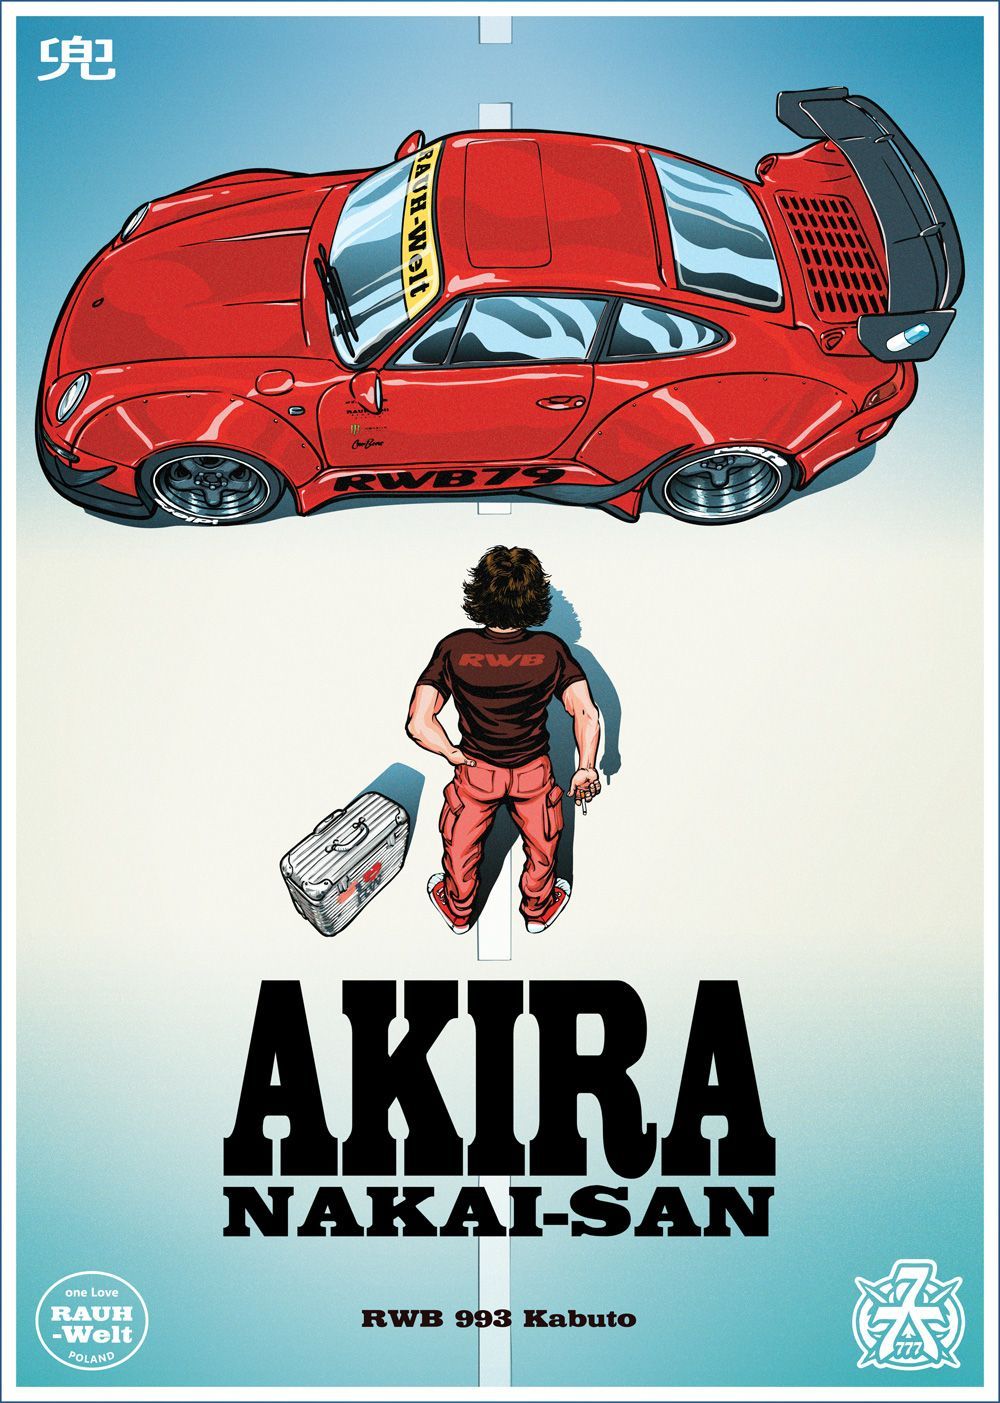 Akira Poster Nakai San & RWB 993 Kabuto. Akira